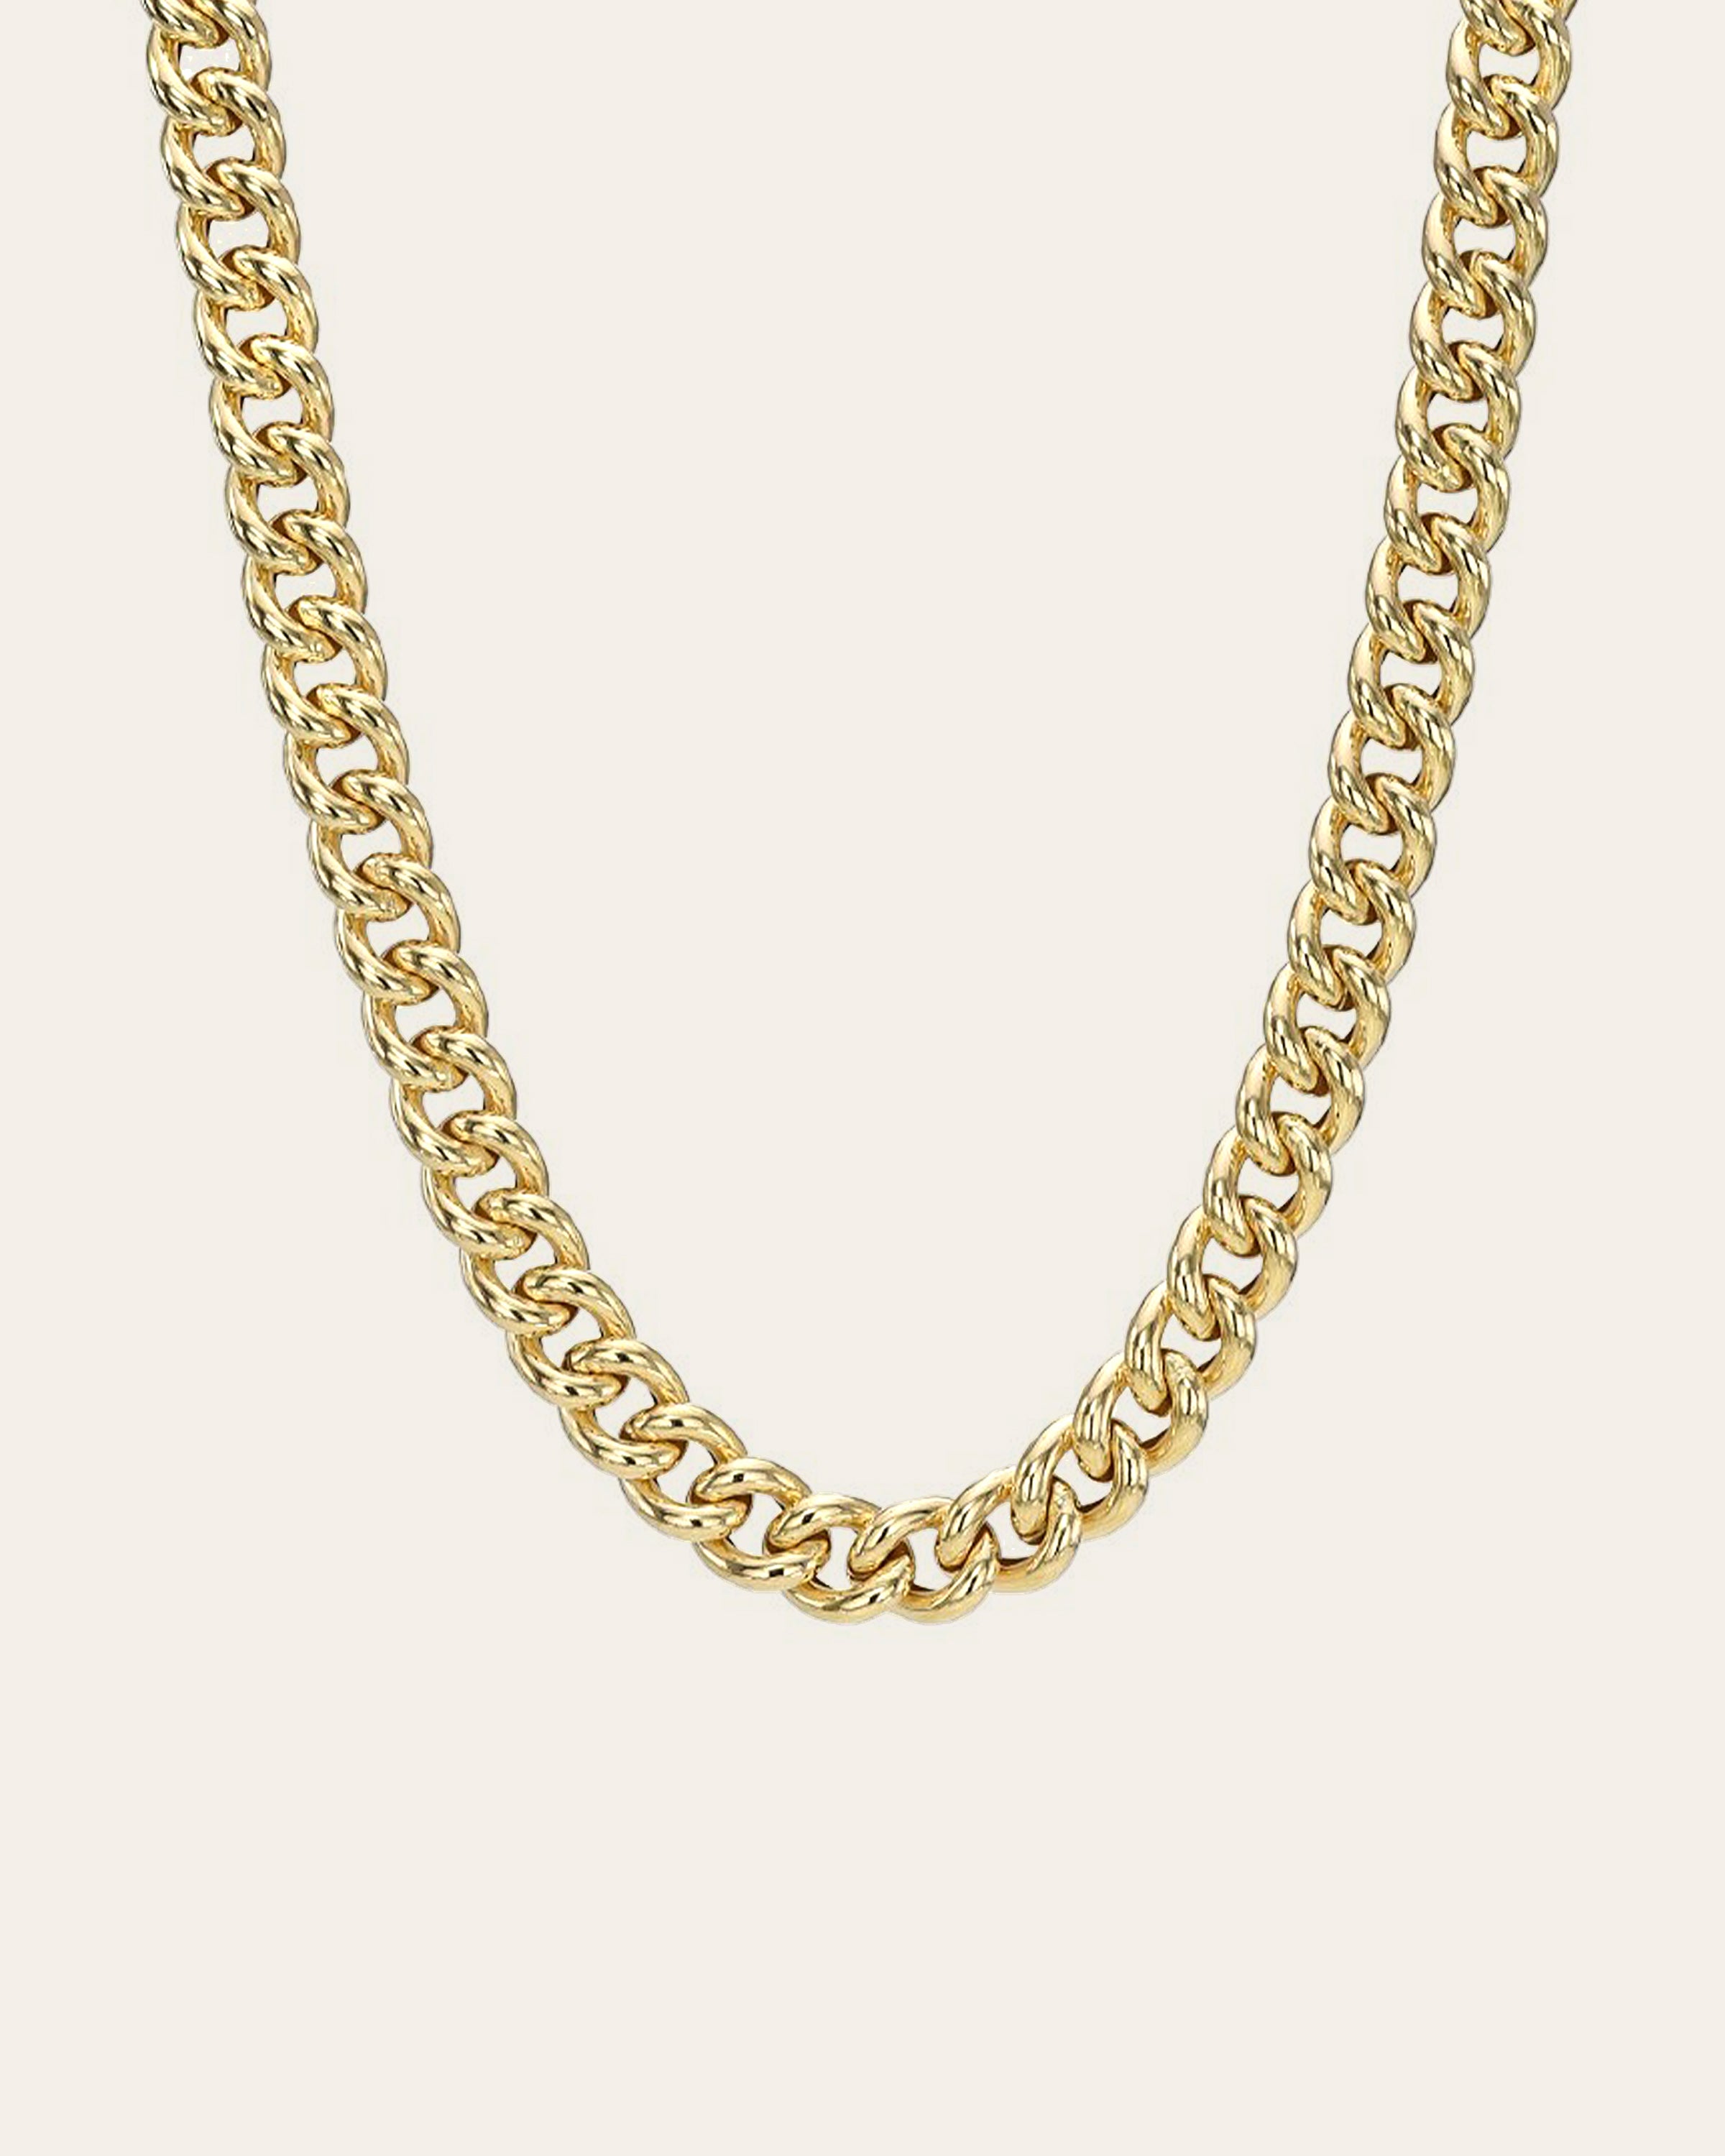 14k Gold Large Miami Cuban Bracelet - Zoe Lev Jewelry